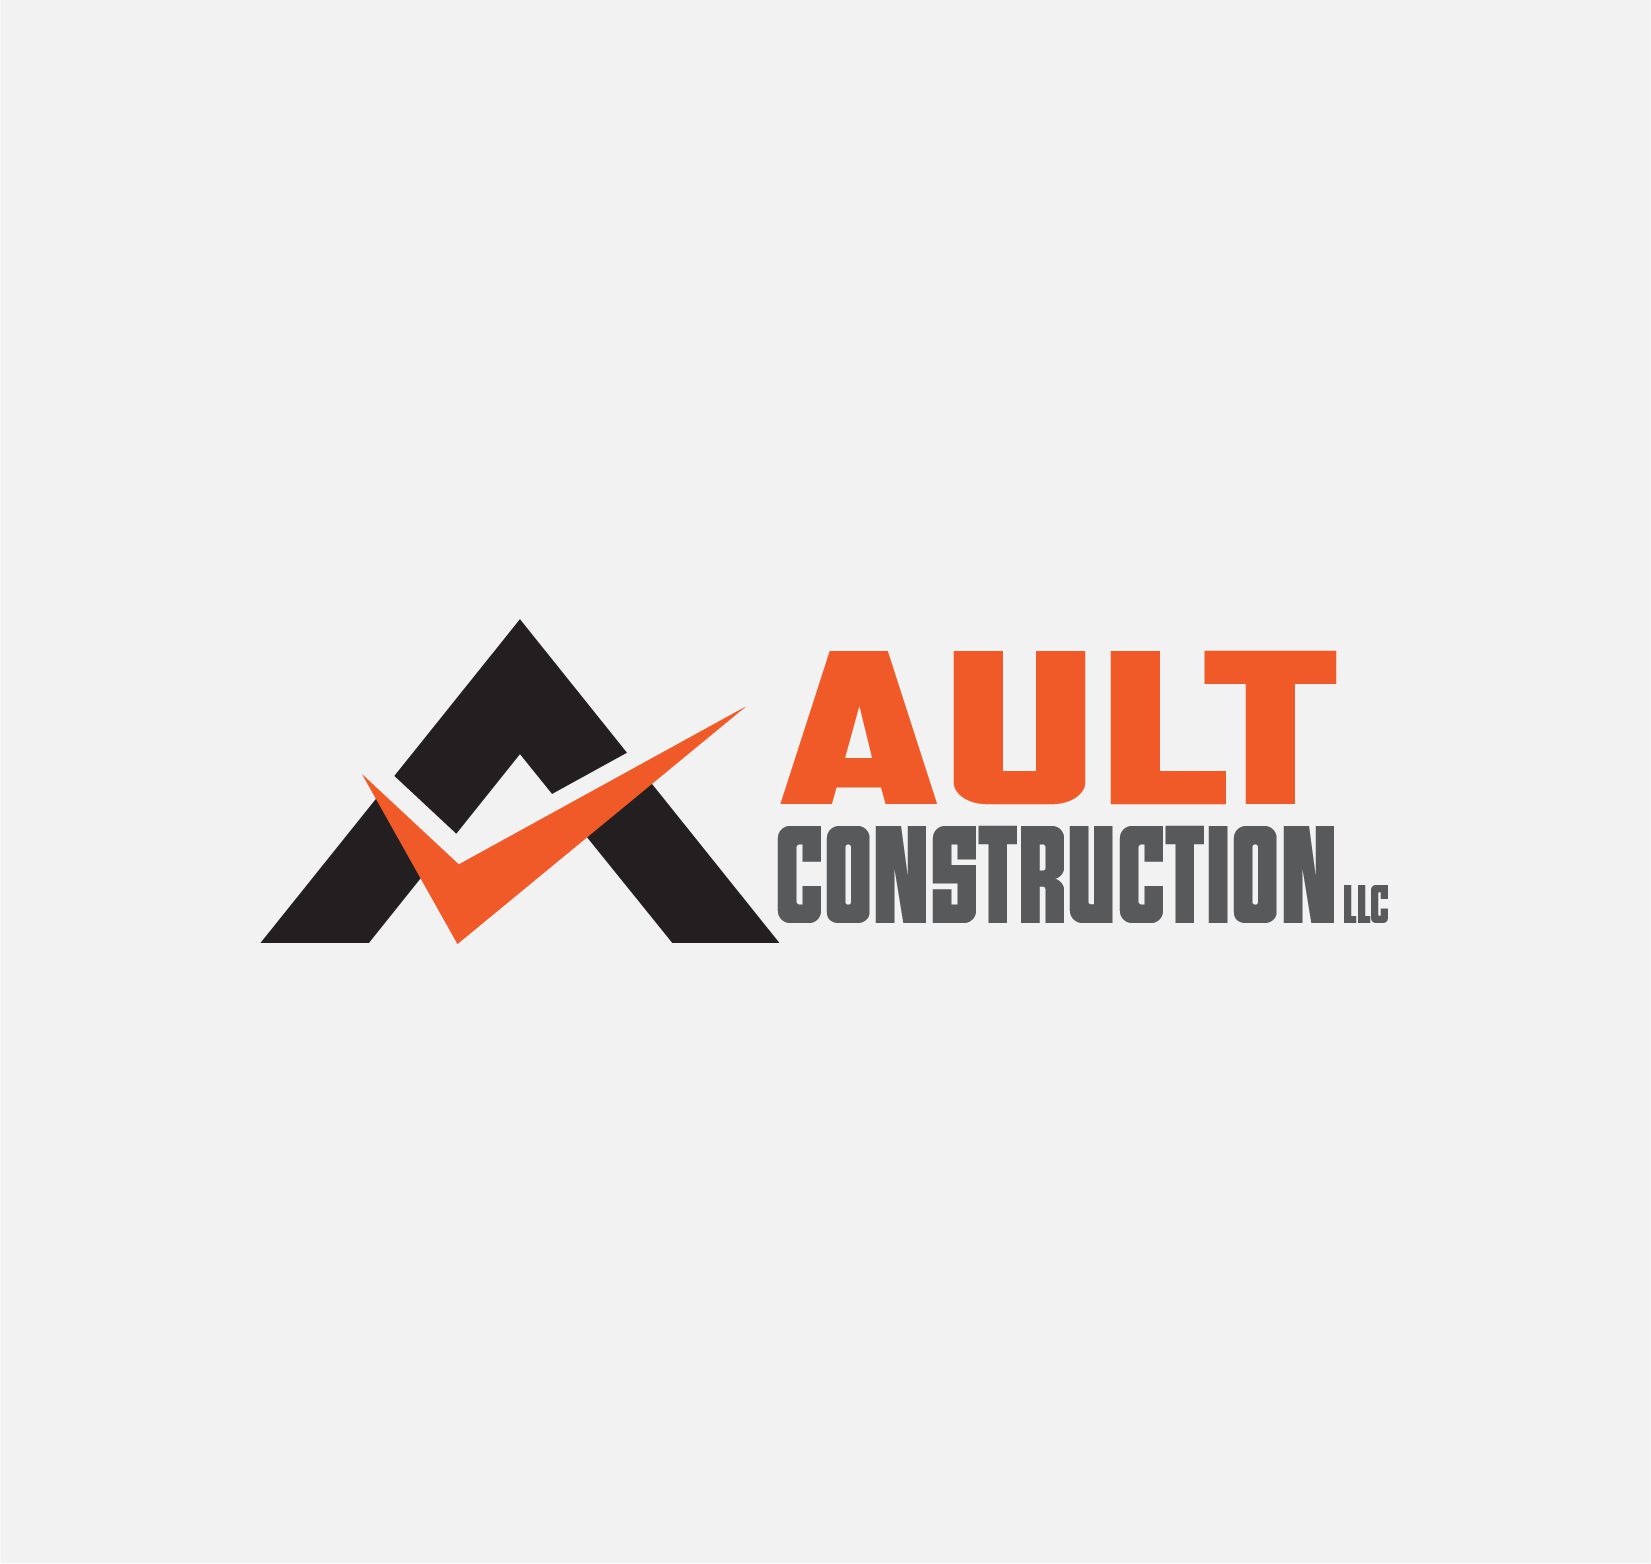 Ault Construction logo